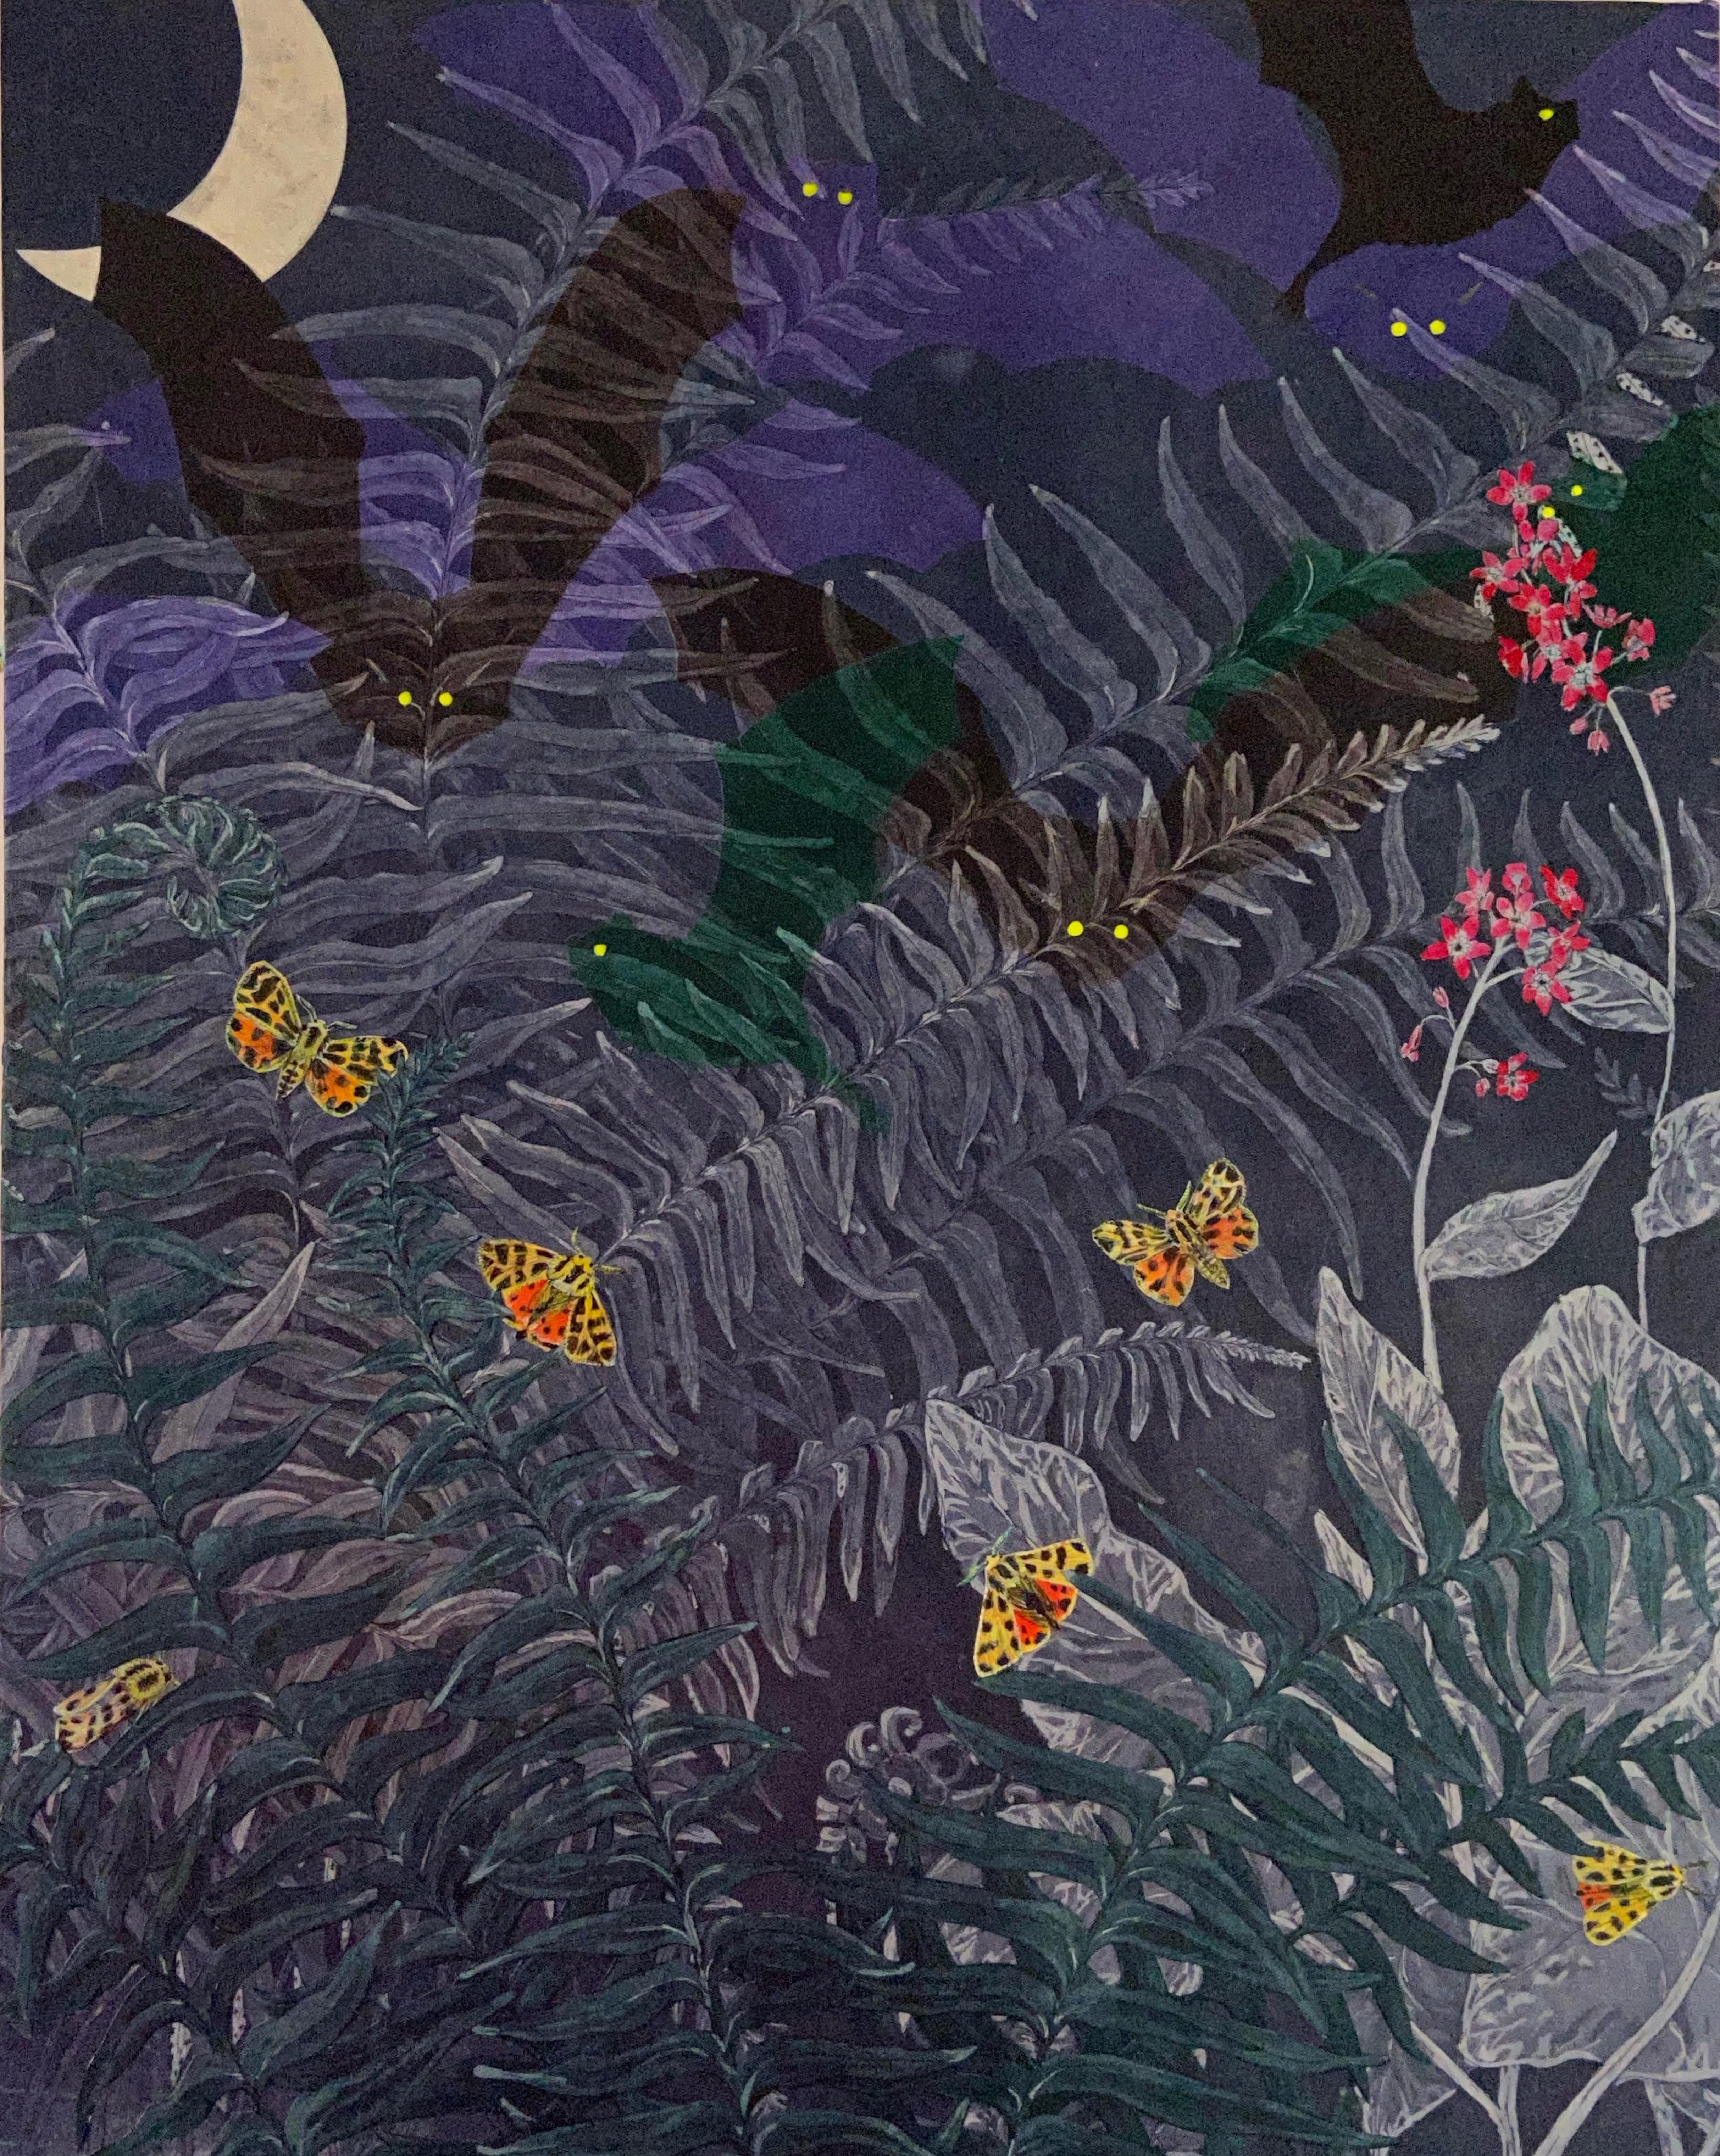 Ornate Tiger Moths and Bats - Mixed Media Art by Julia Lucey